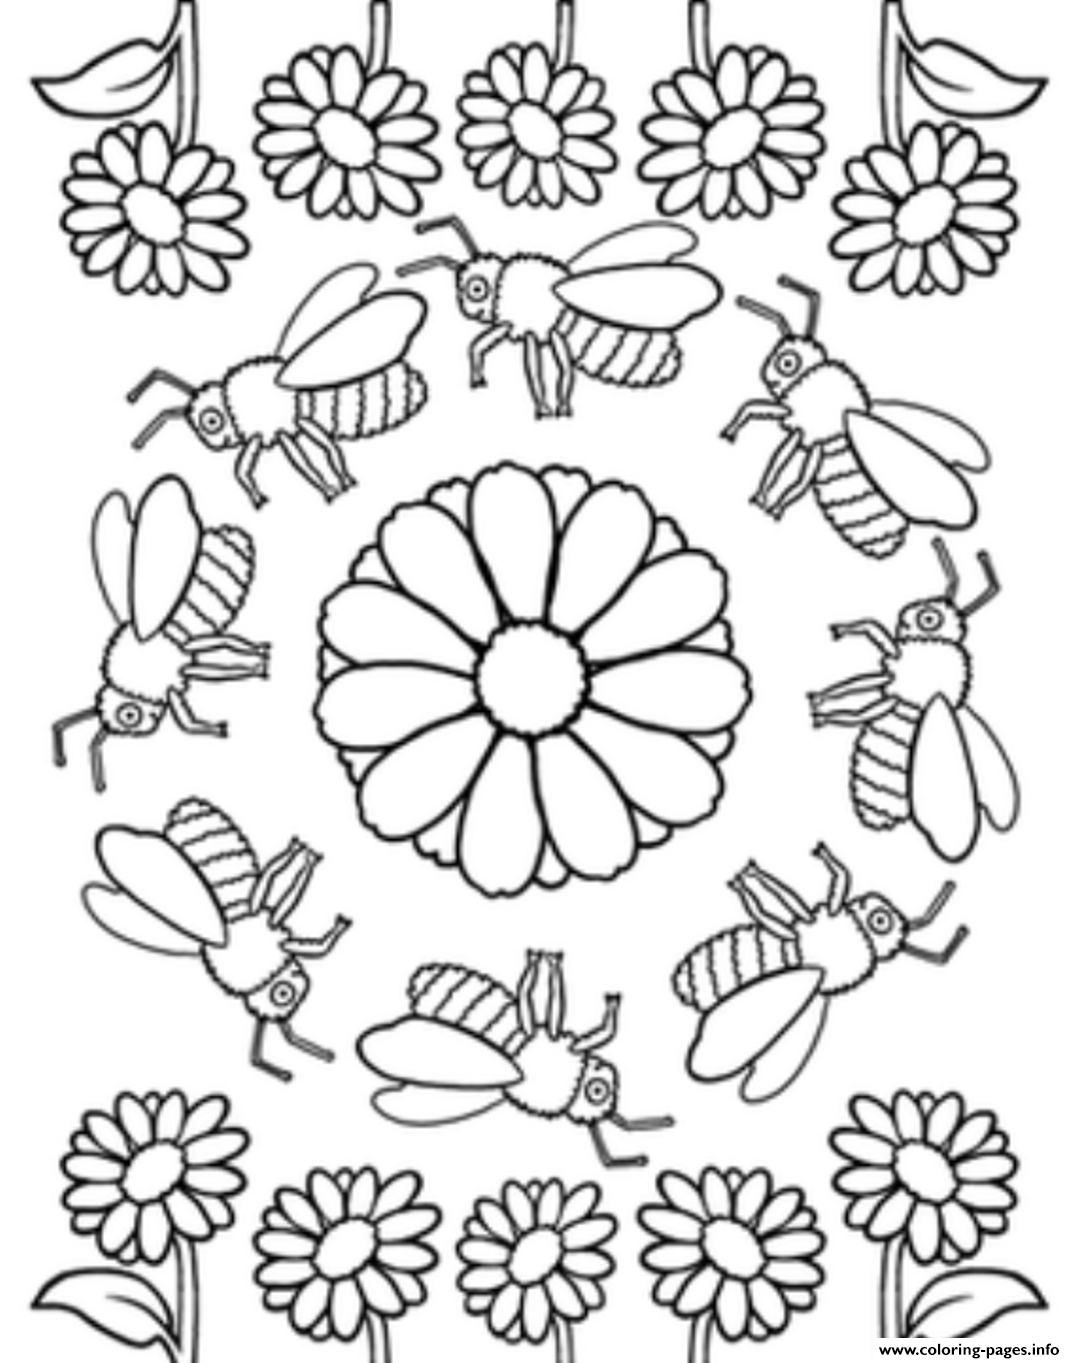 Bees Mandala S2653 coloring